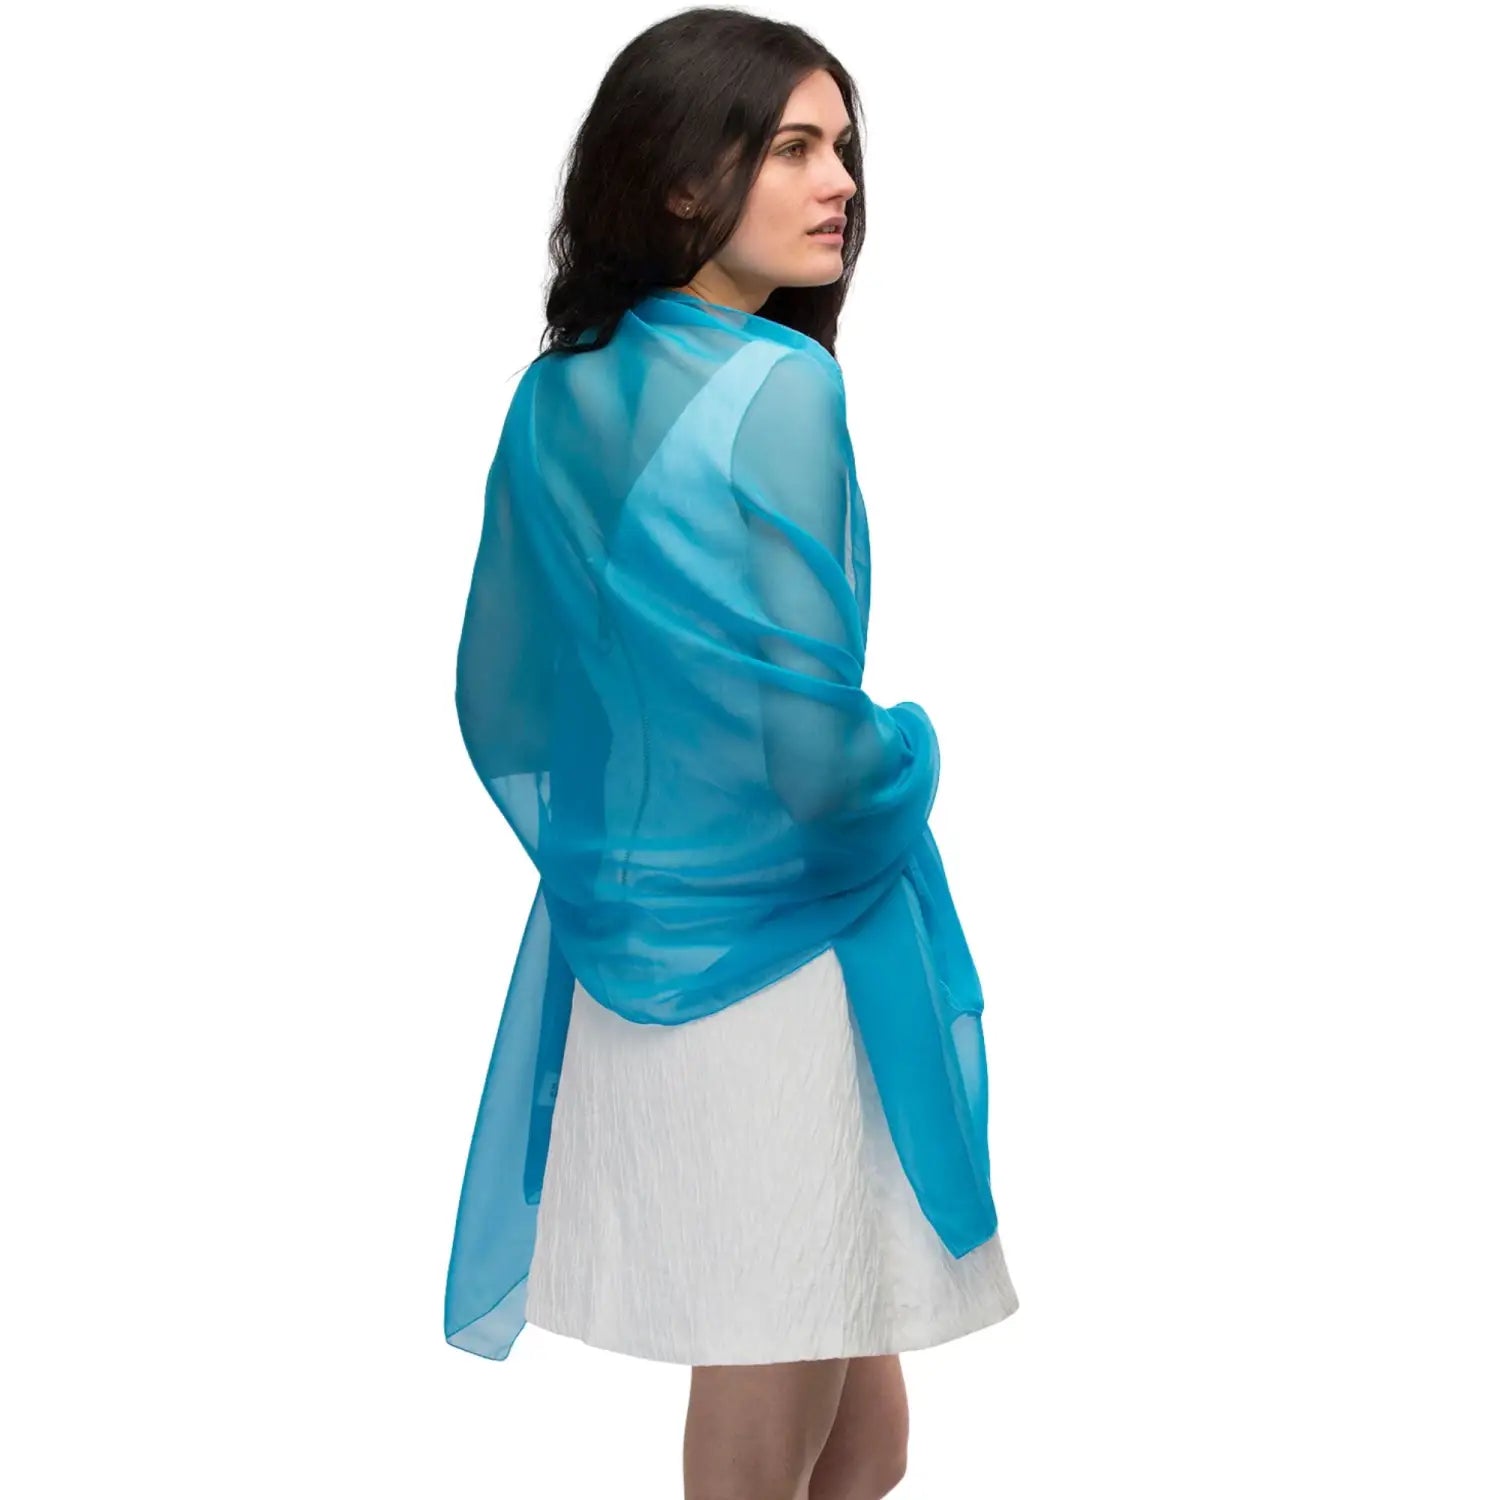 Woman wearing blue chiffon shawl from Plain Chiffon Shawl Semi-Opaque collection.